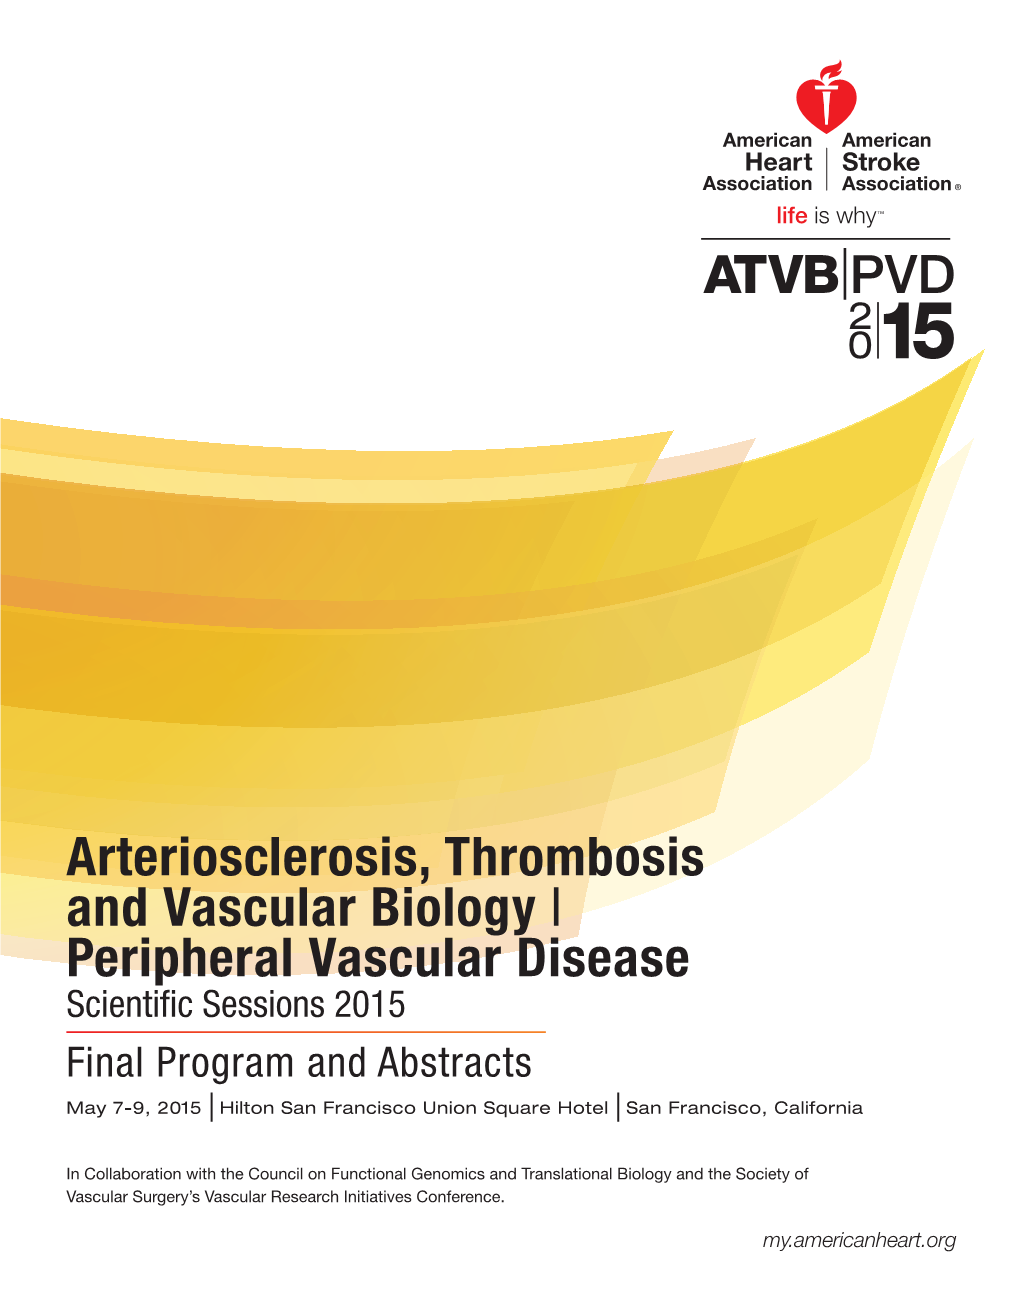 Arteriosclerosis, Thrombosis and Vascular Biology I Peripheral Vascular Disease